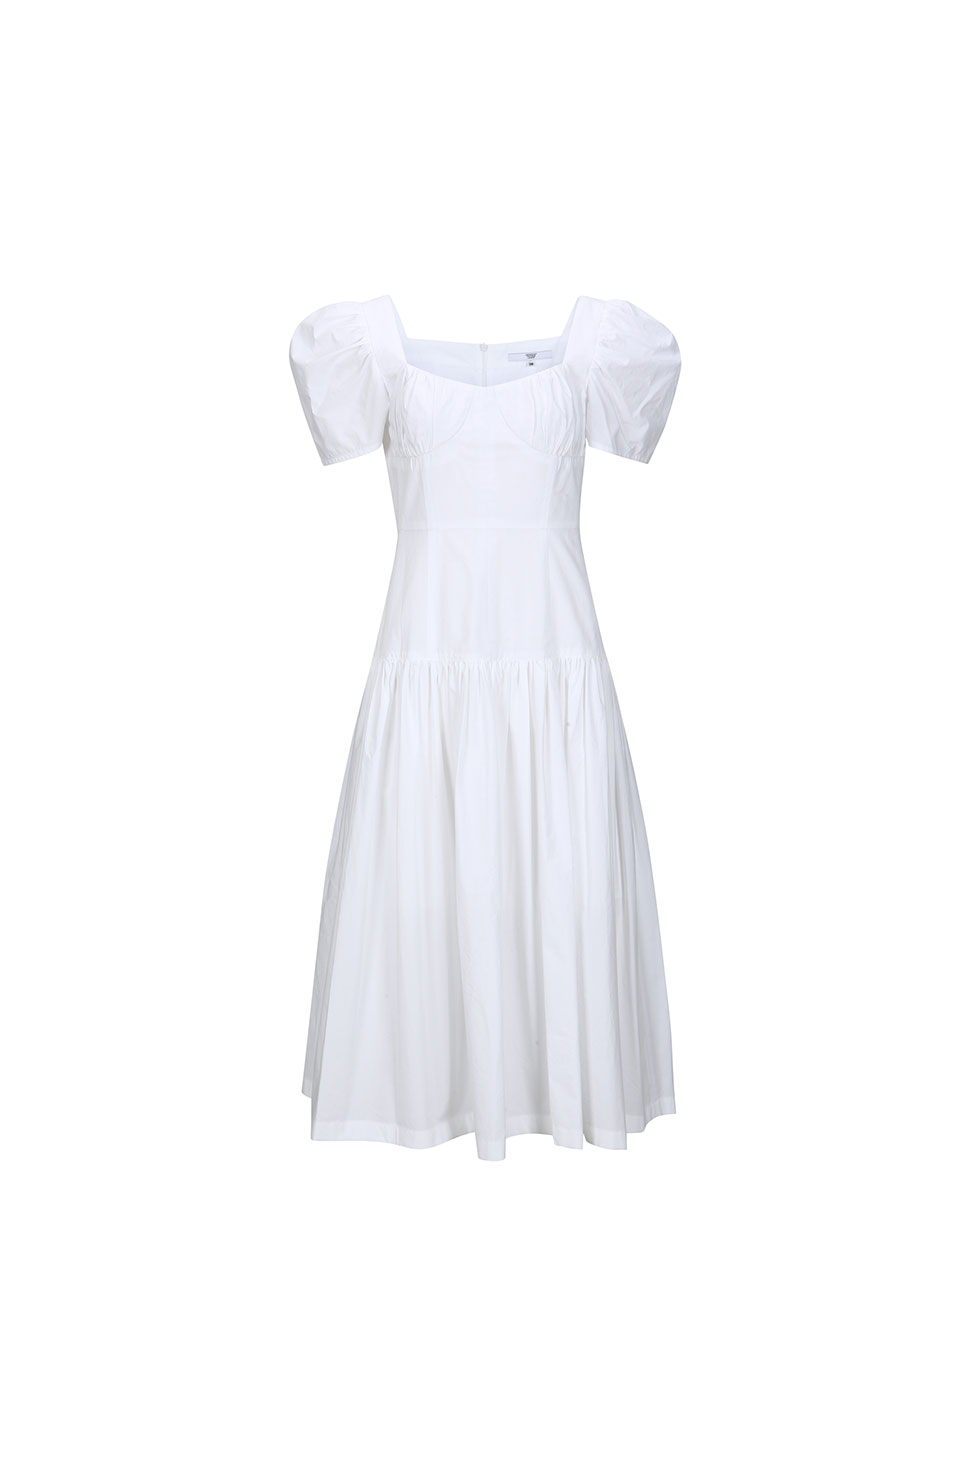 CORSET PUFF DRESS - WHITE